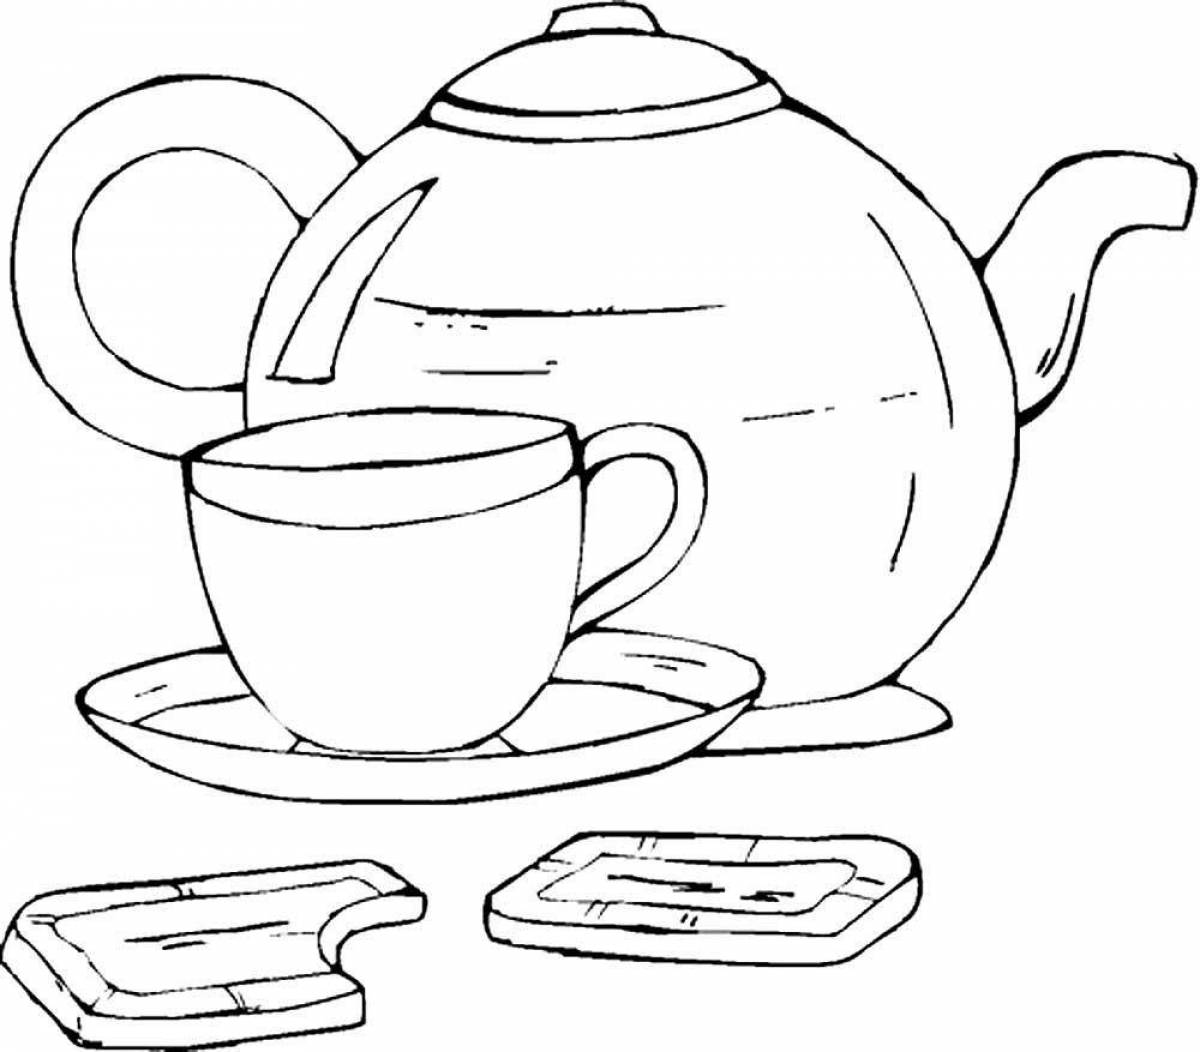 Wonderful teapot coloring book for preschoolers 3-4 years old